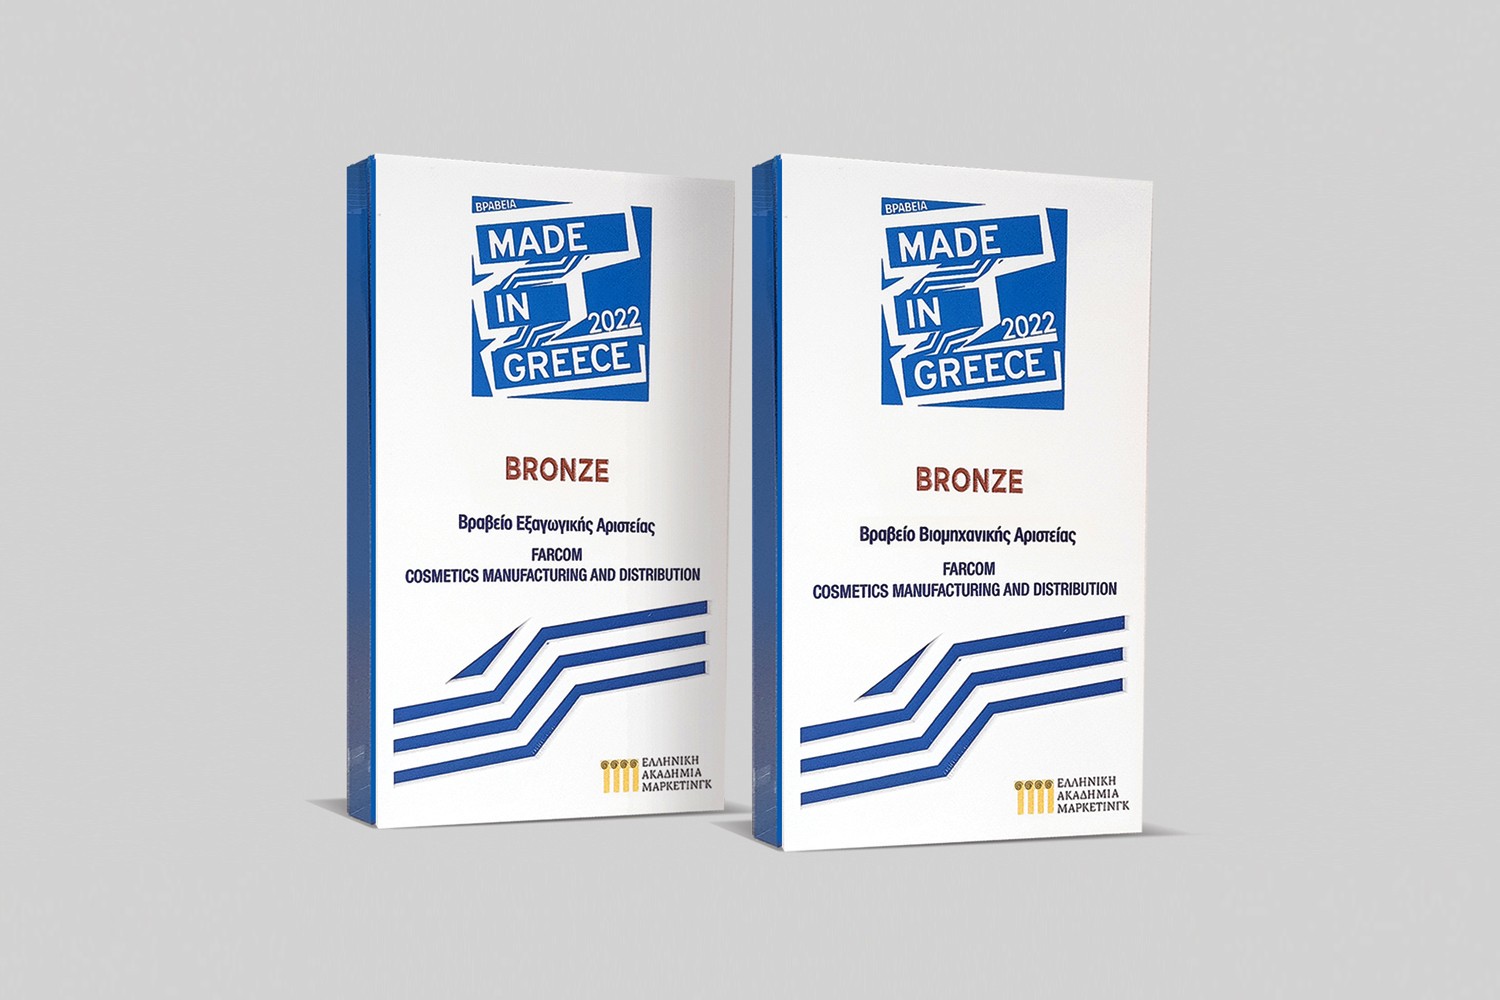 farcom-made-in-greece-awards-2022-bronze-both.jpg